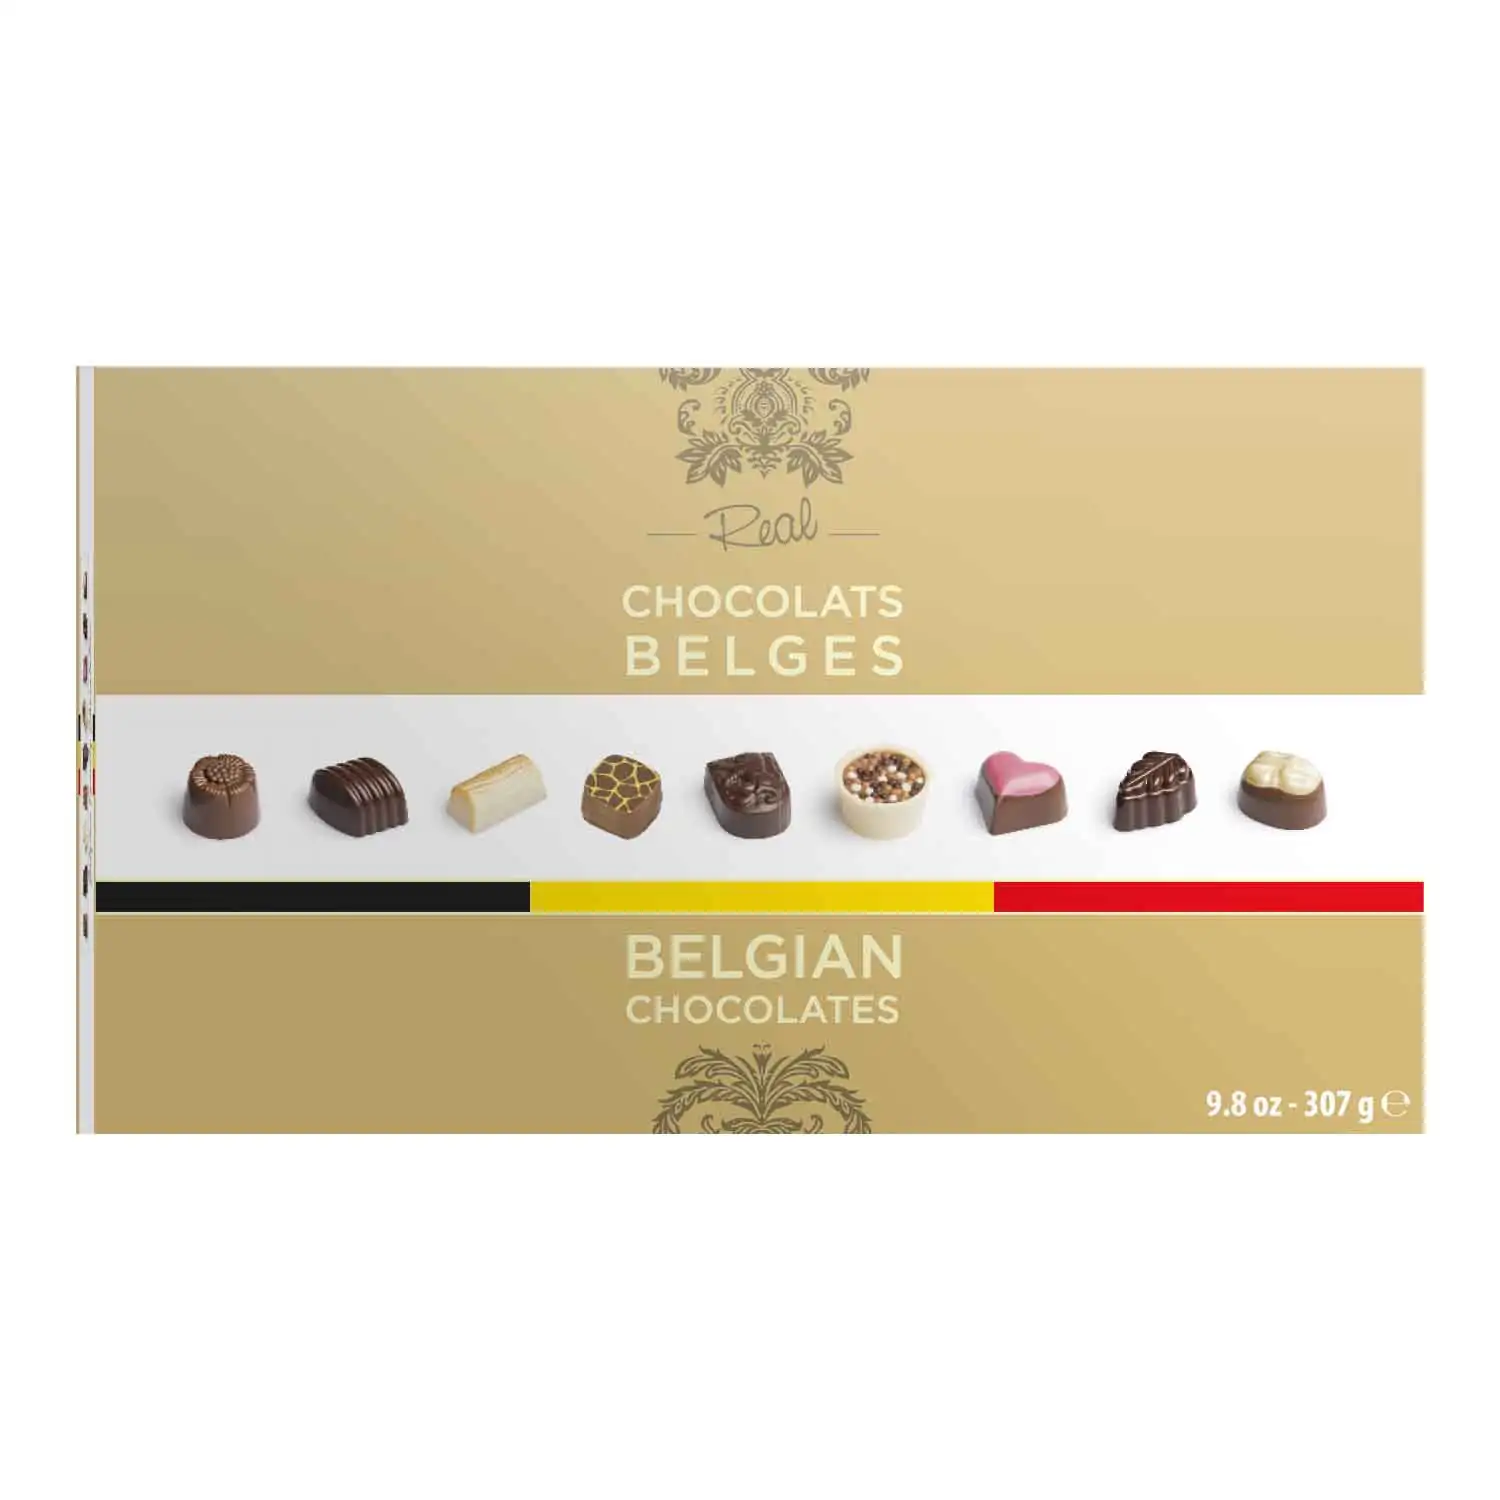 Real belgian chocolates 307g - Buy at Real Tobacco